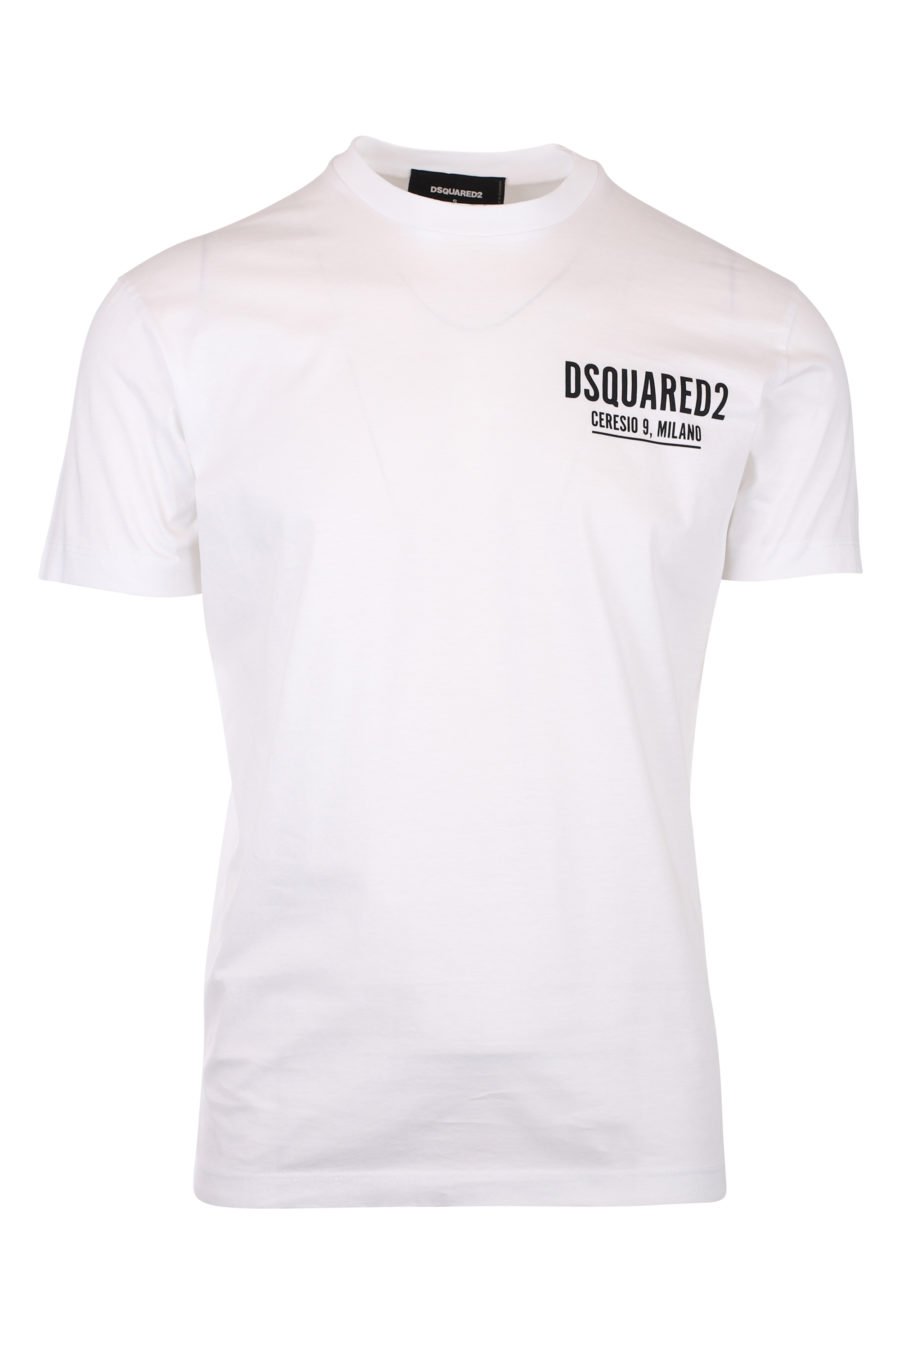 Camiseta blanca con logo pequeño ceresio 9 - IMG 9784